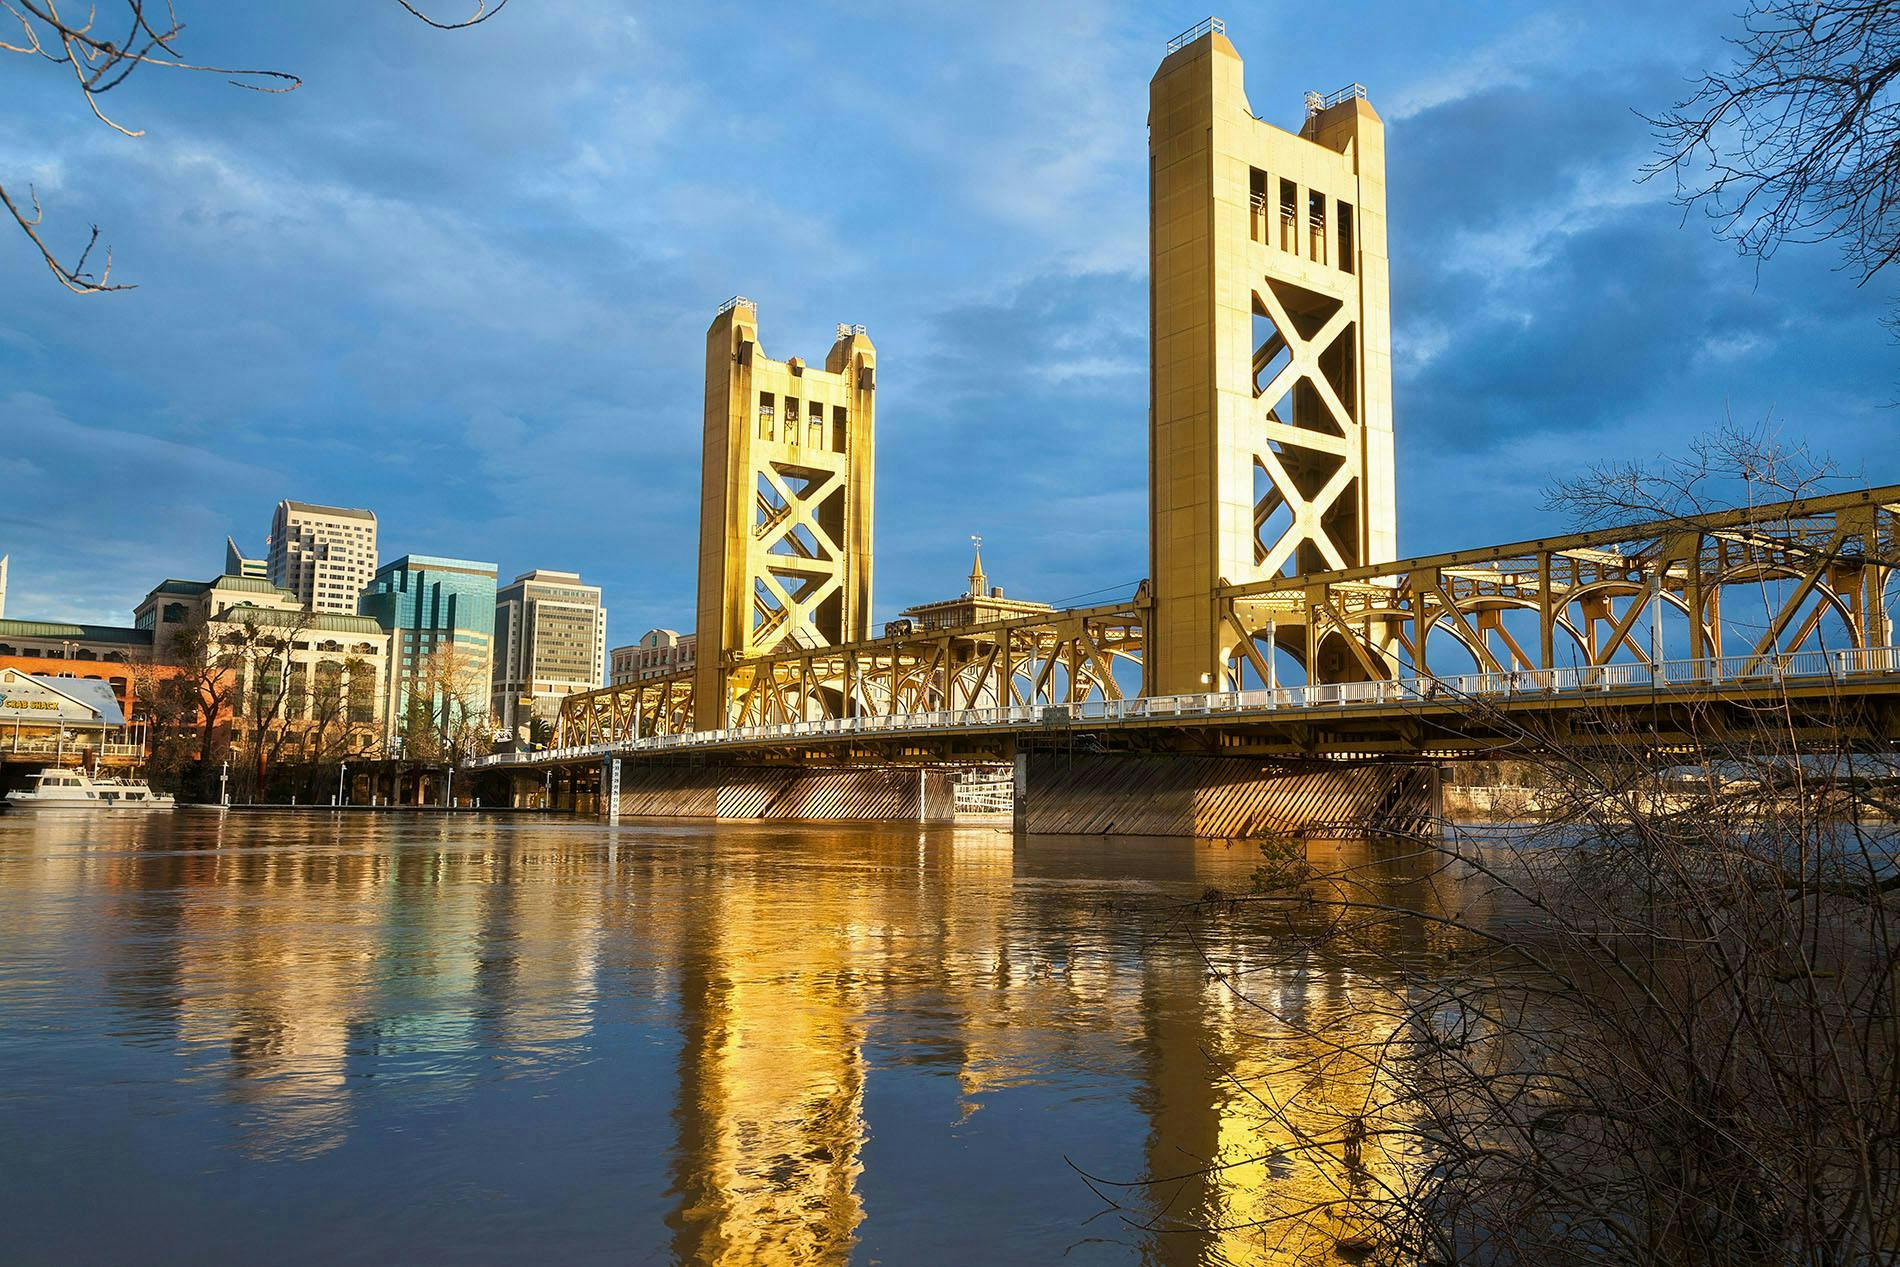 Sacramento Water Image of Bridge